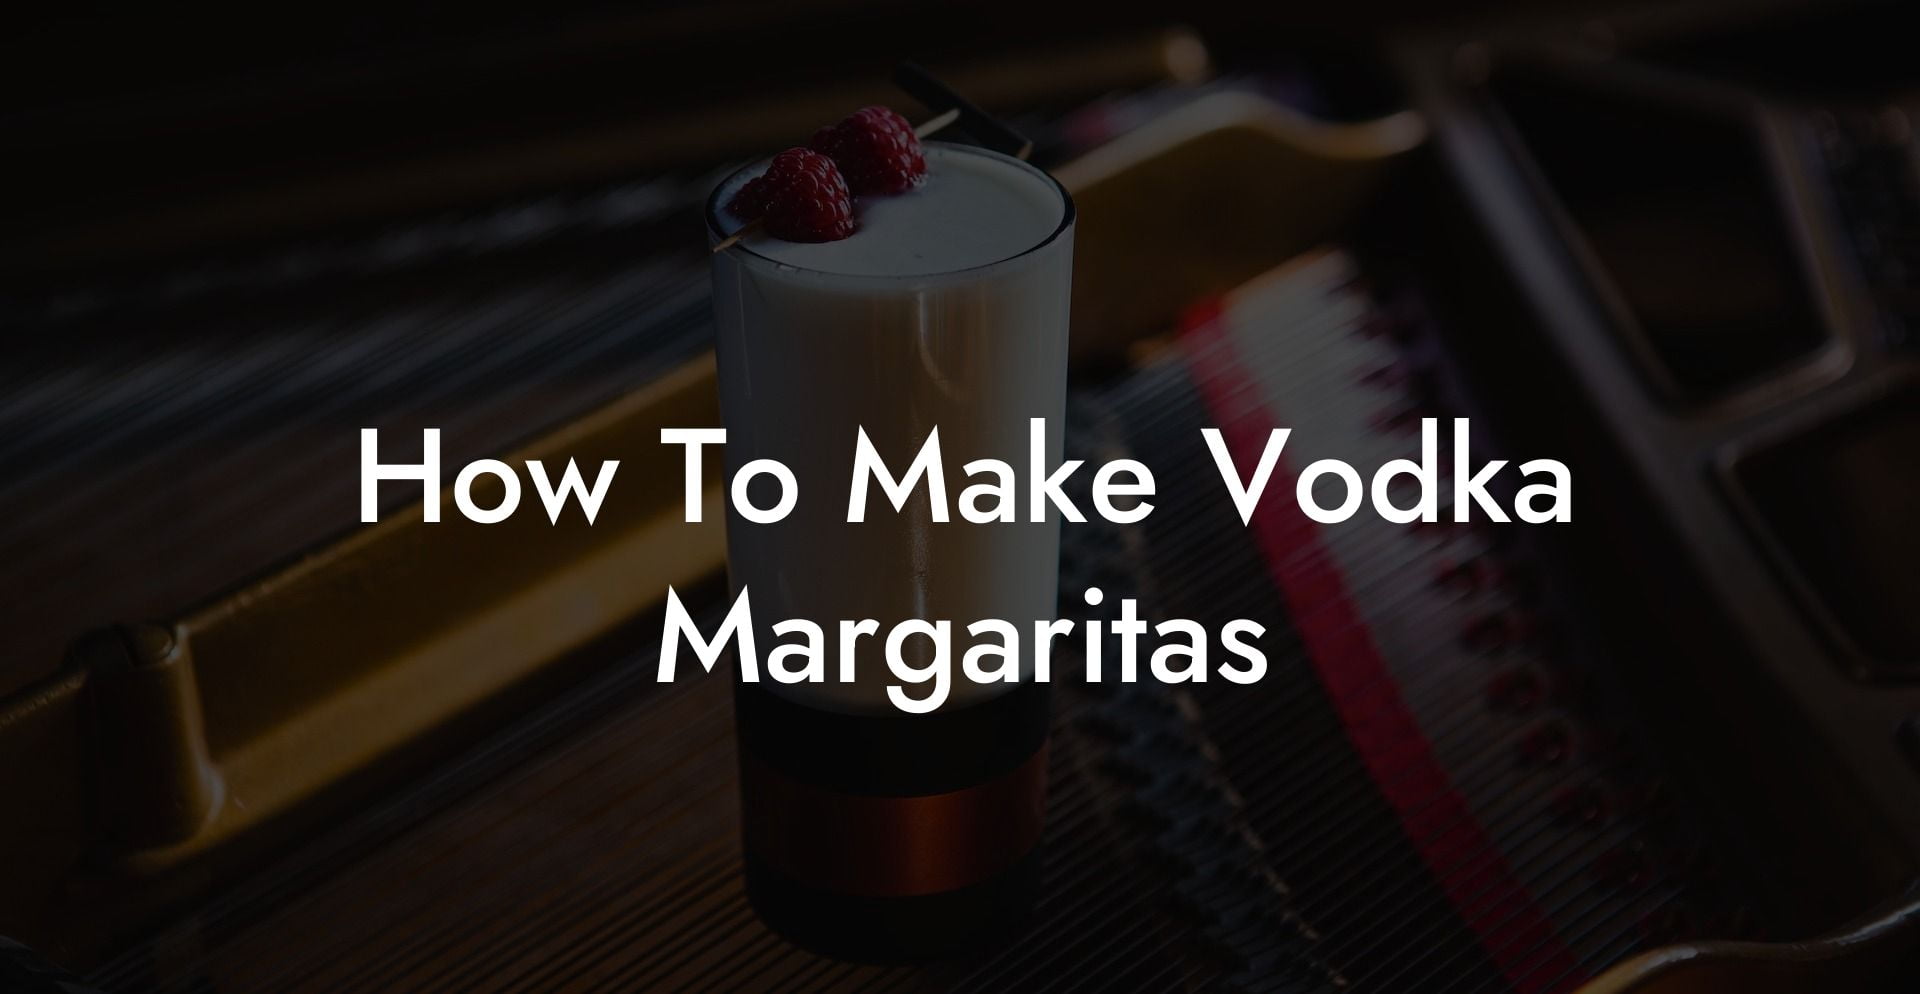 How To Make Vodka Margaritas